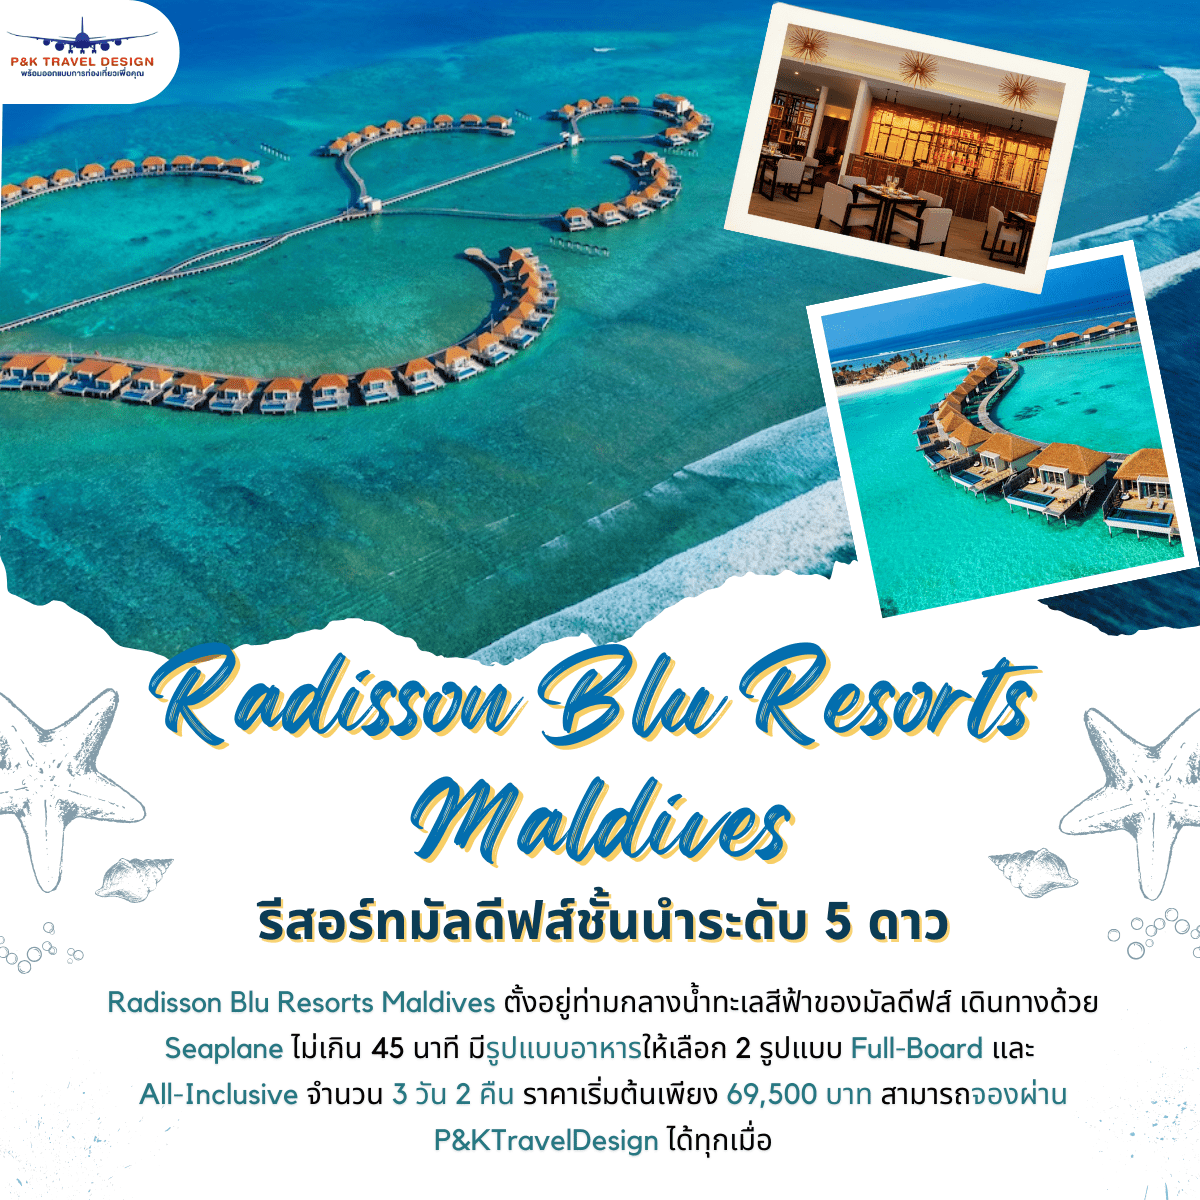 Radisson Blu Resorts Maldives รีสอร์ทมัลดีฟส์ชั้นนำระดับ 5 ดาว